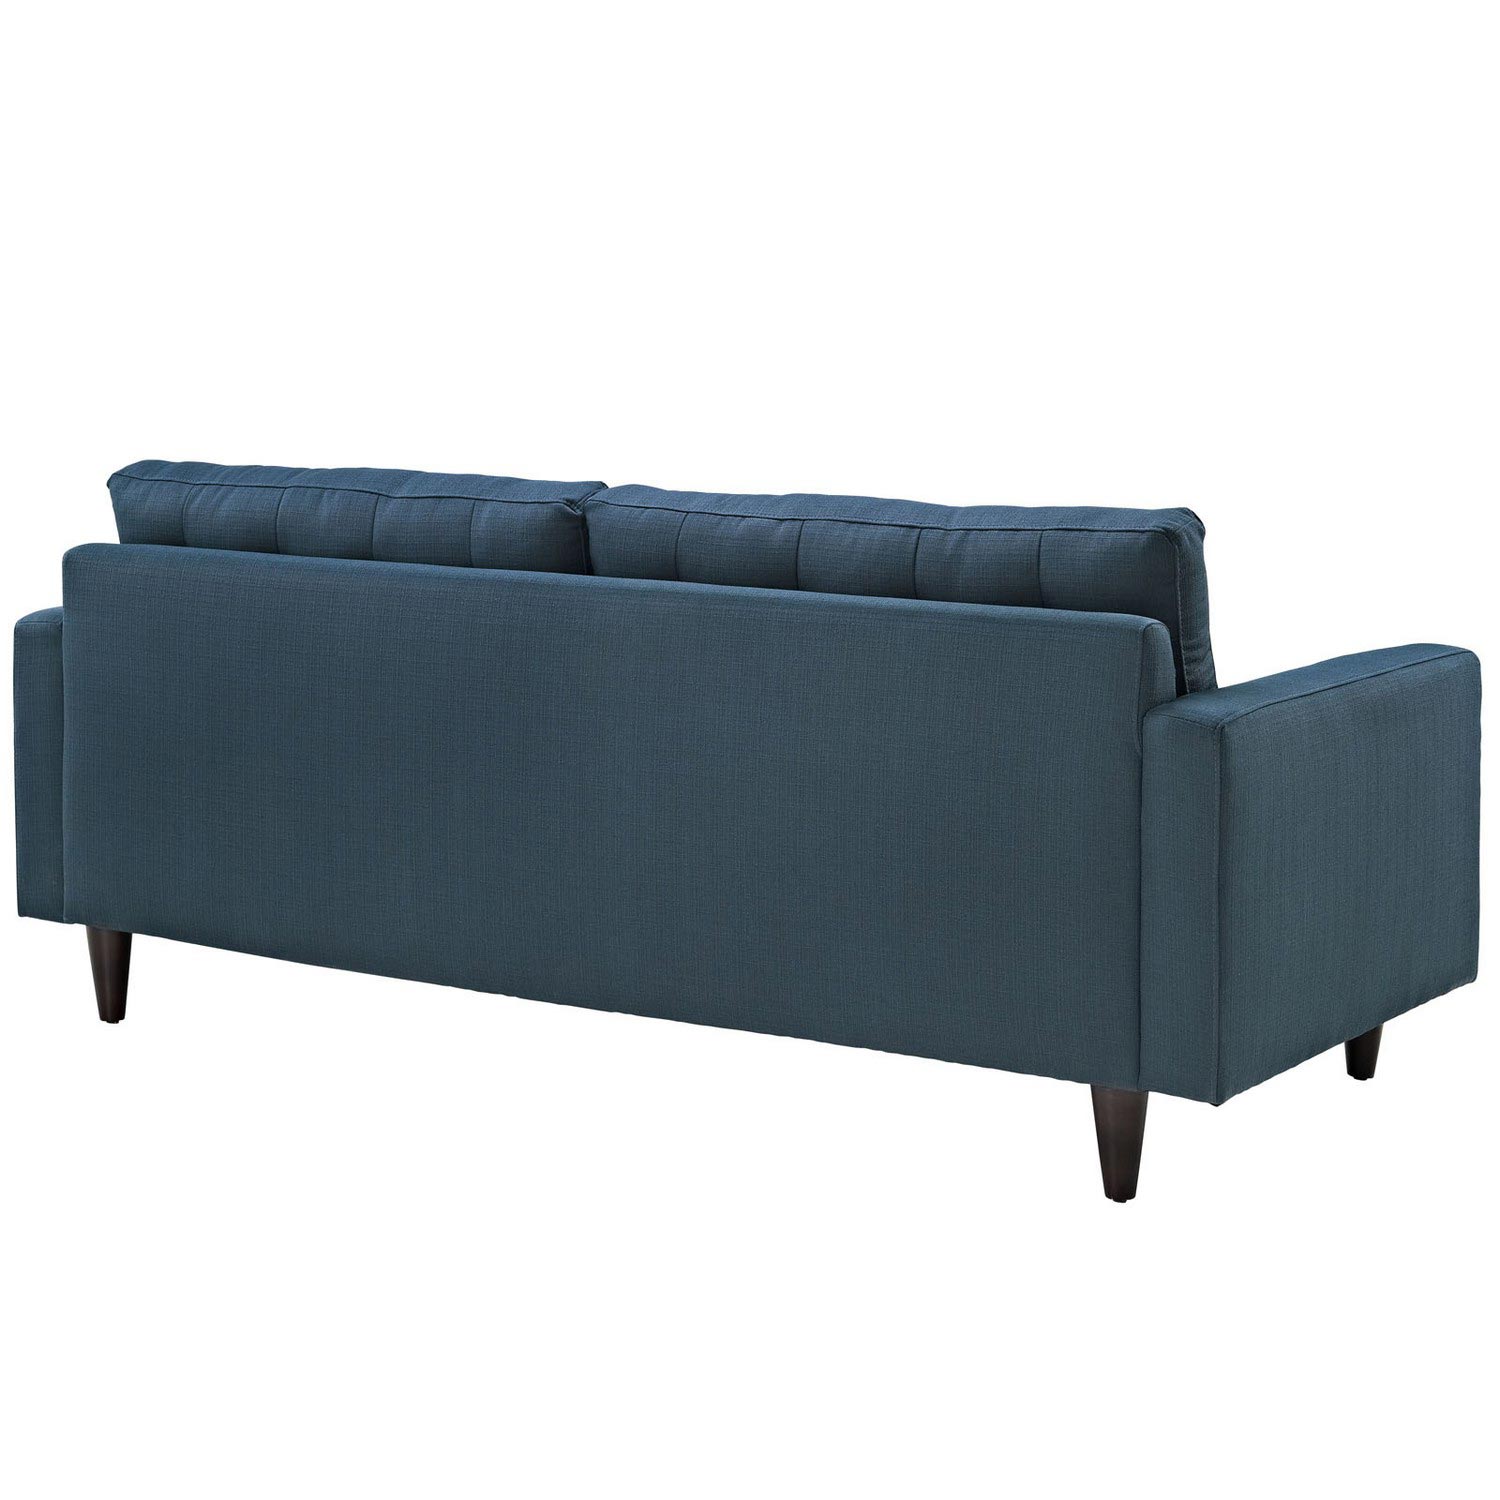 Modway Empress Upholstered Sofa - Azure